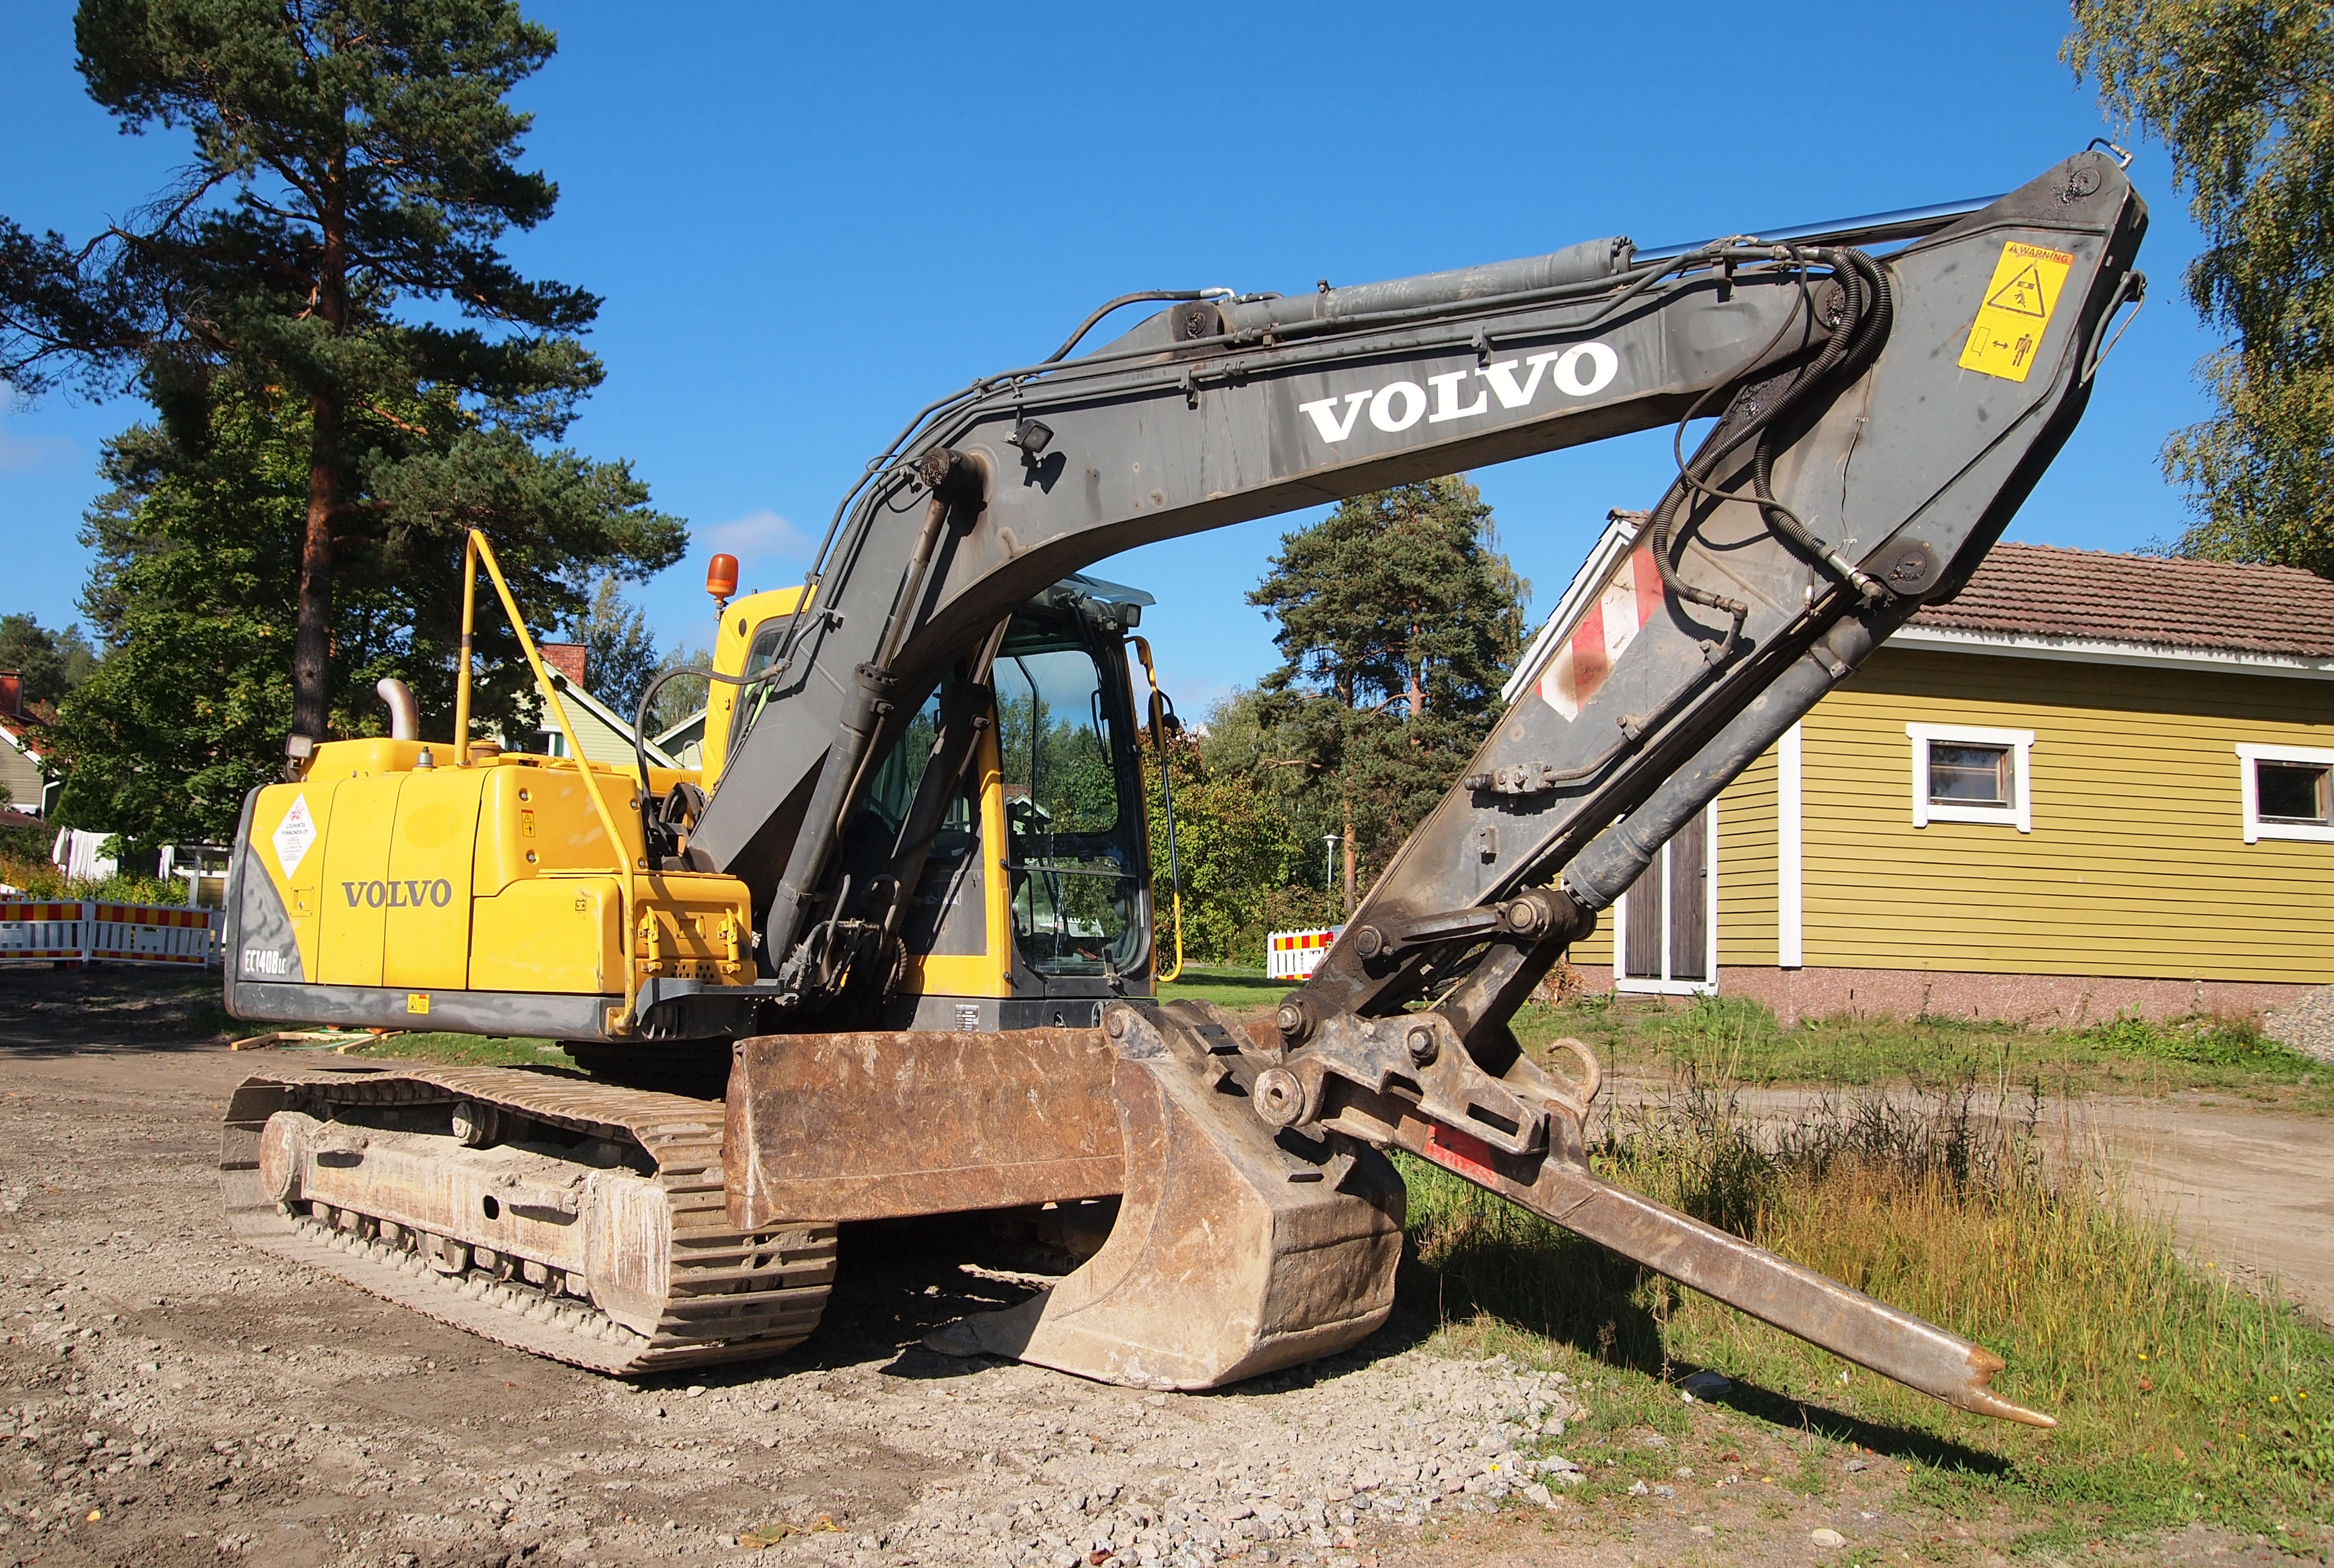 Amazing Volvo Excavator Pictures & Backgrounds